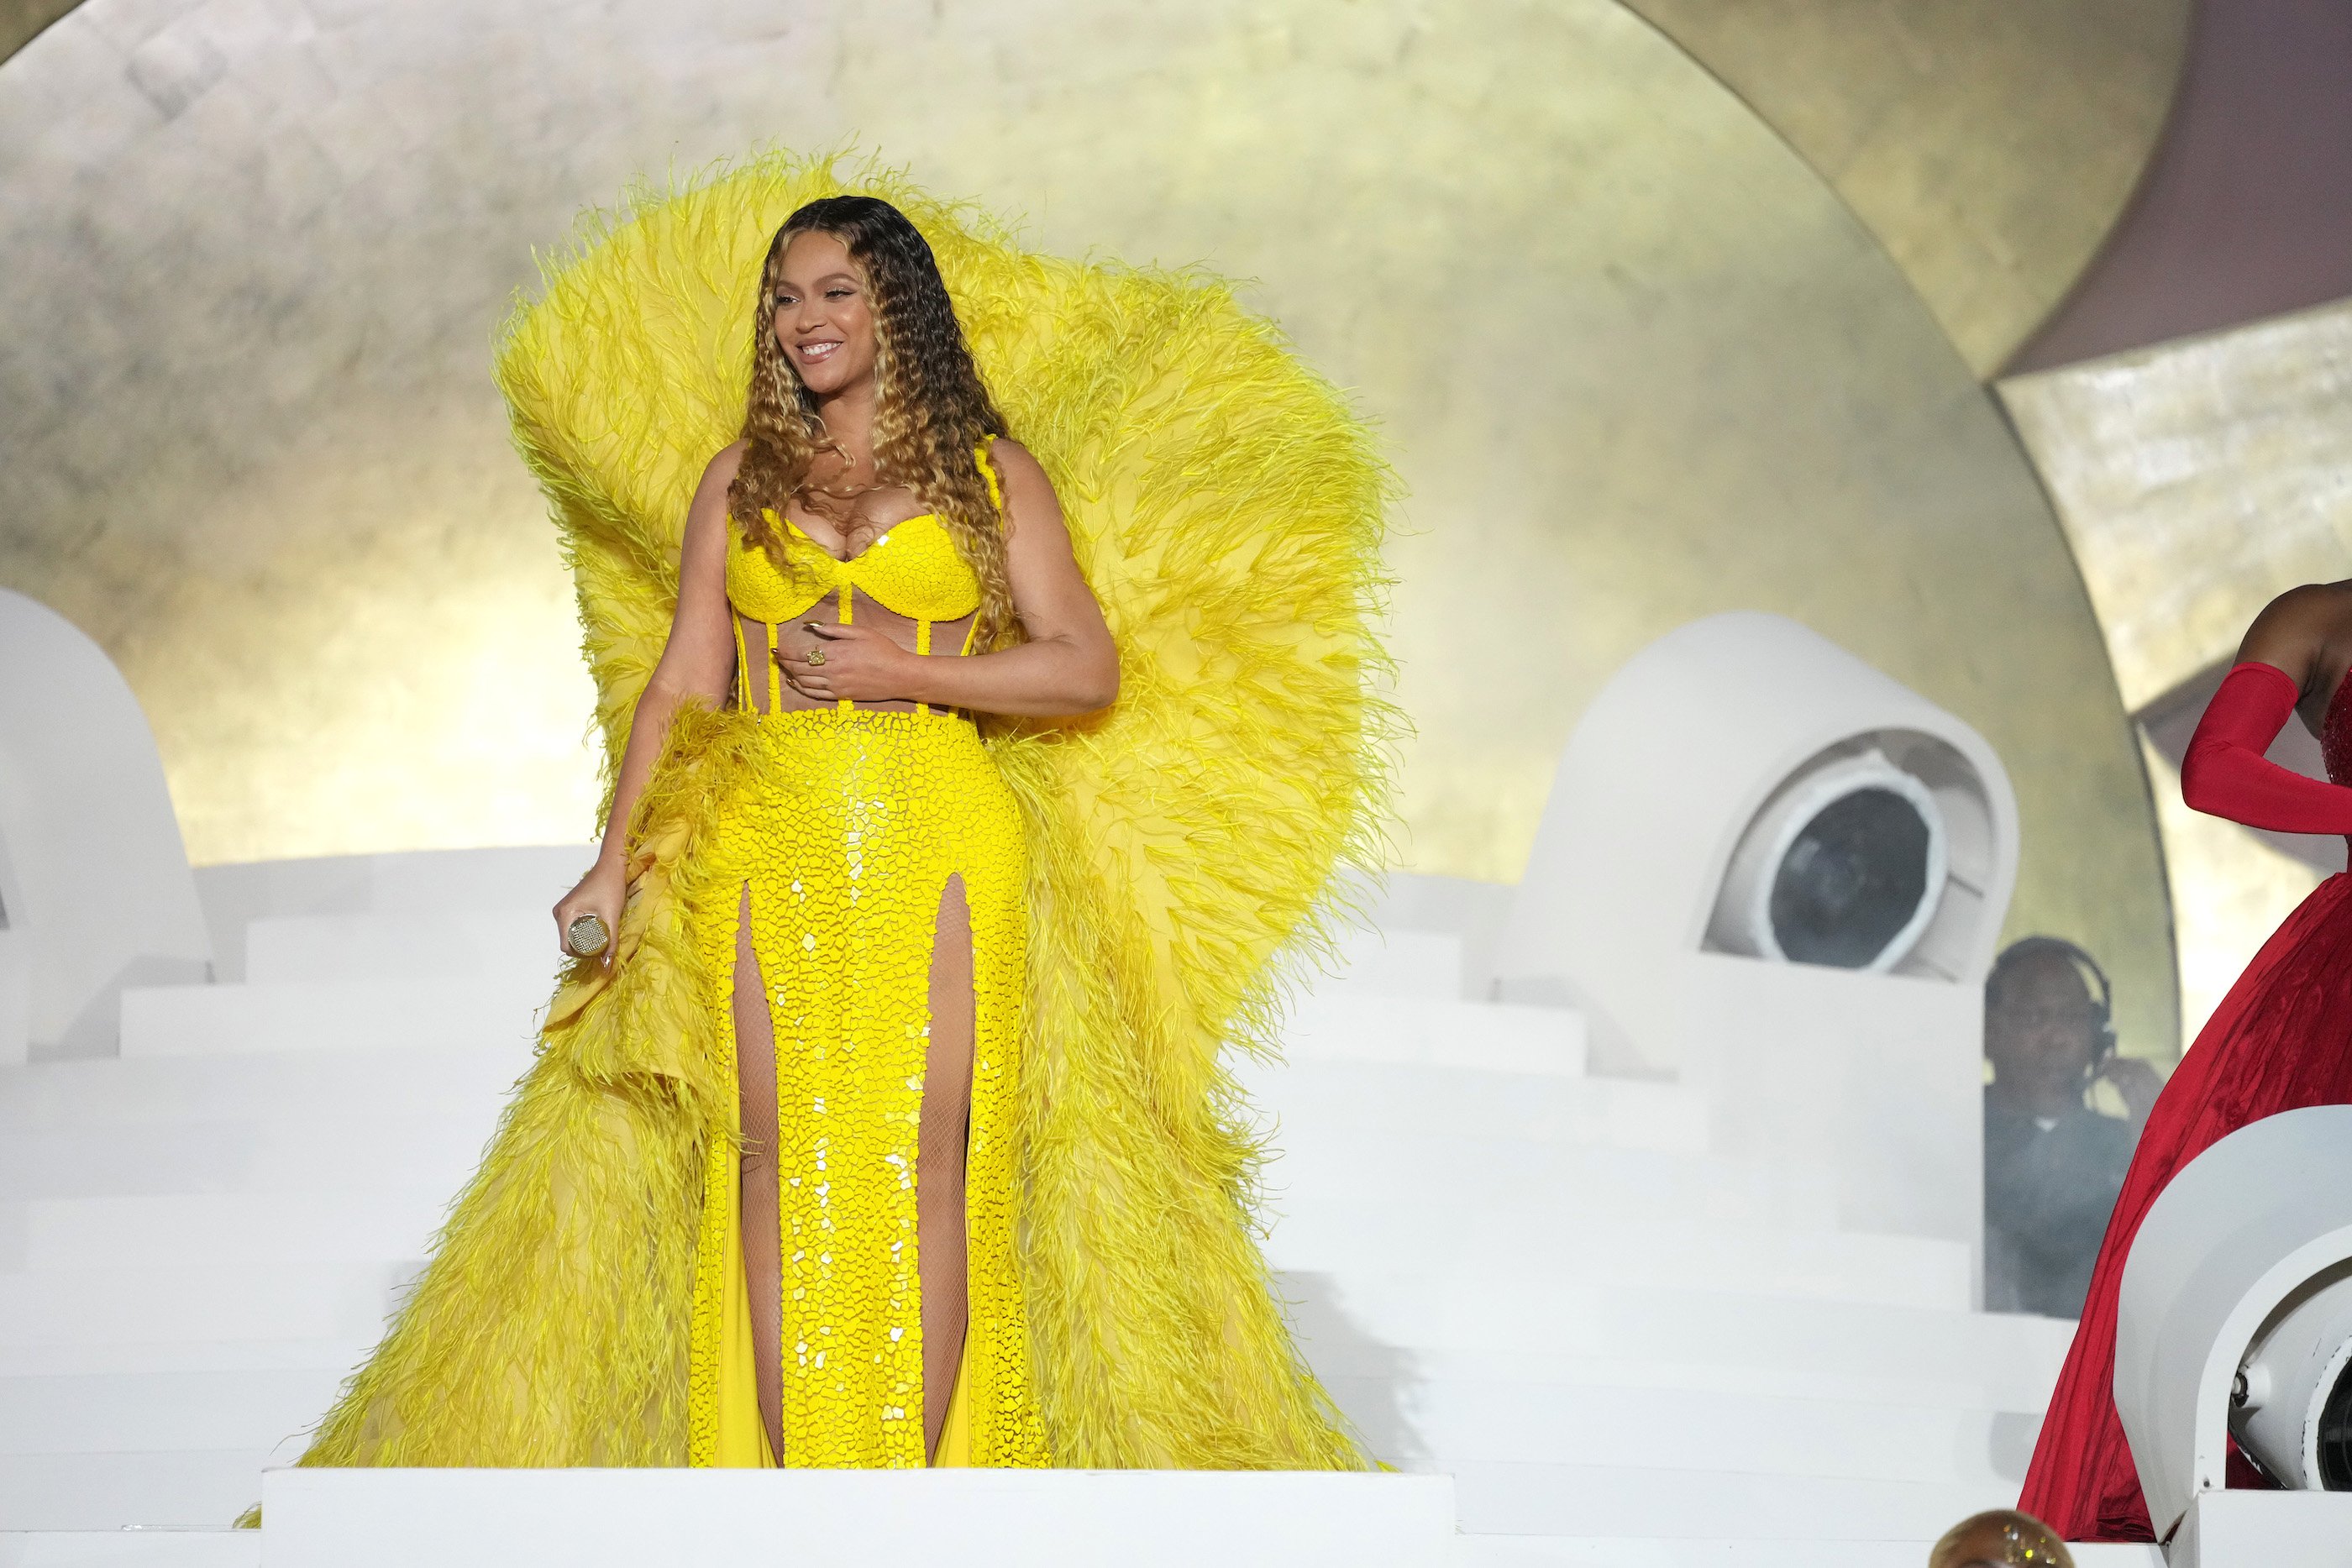 Beyoncé performs on stage headlining the Grand Reveal of Dubai's newest luxury hotel, Atlantis The Royal